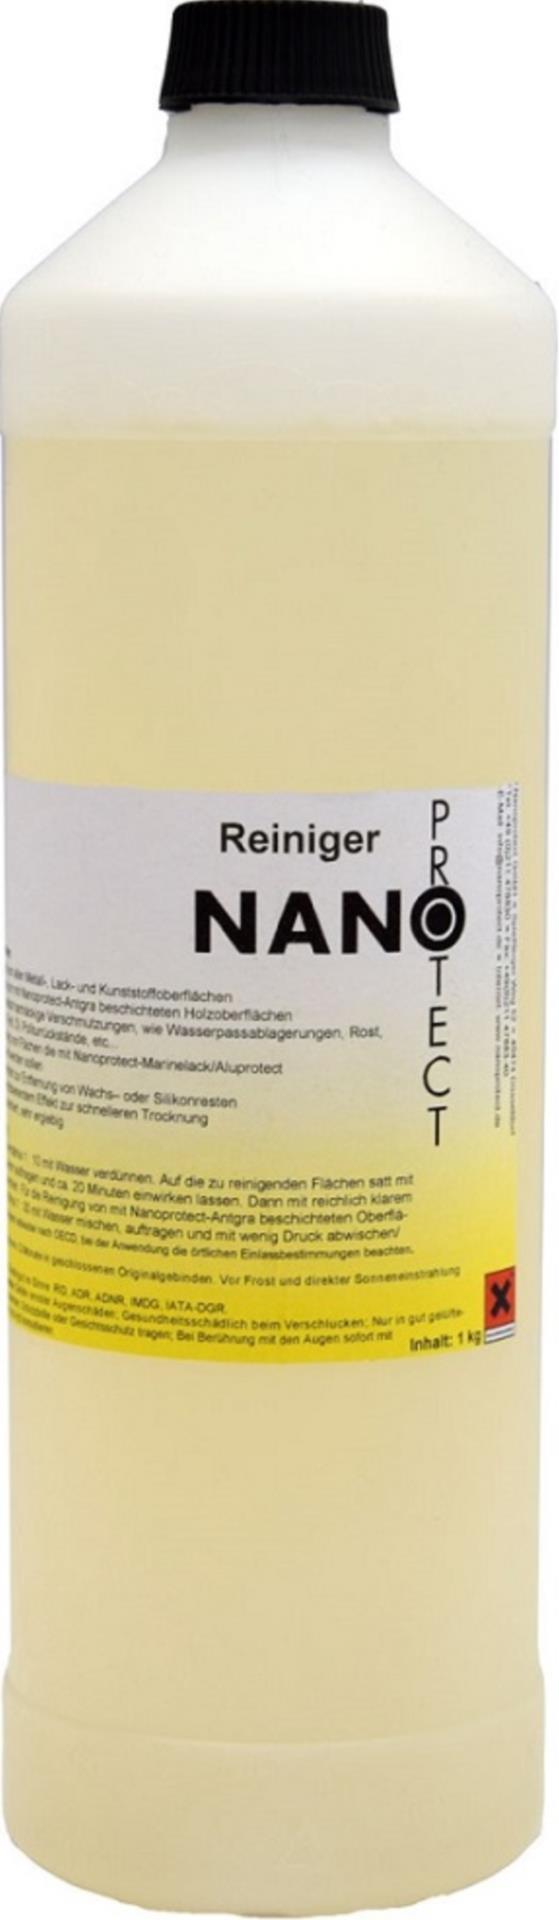 Nanoprotect Reiniger, 250 g